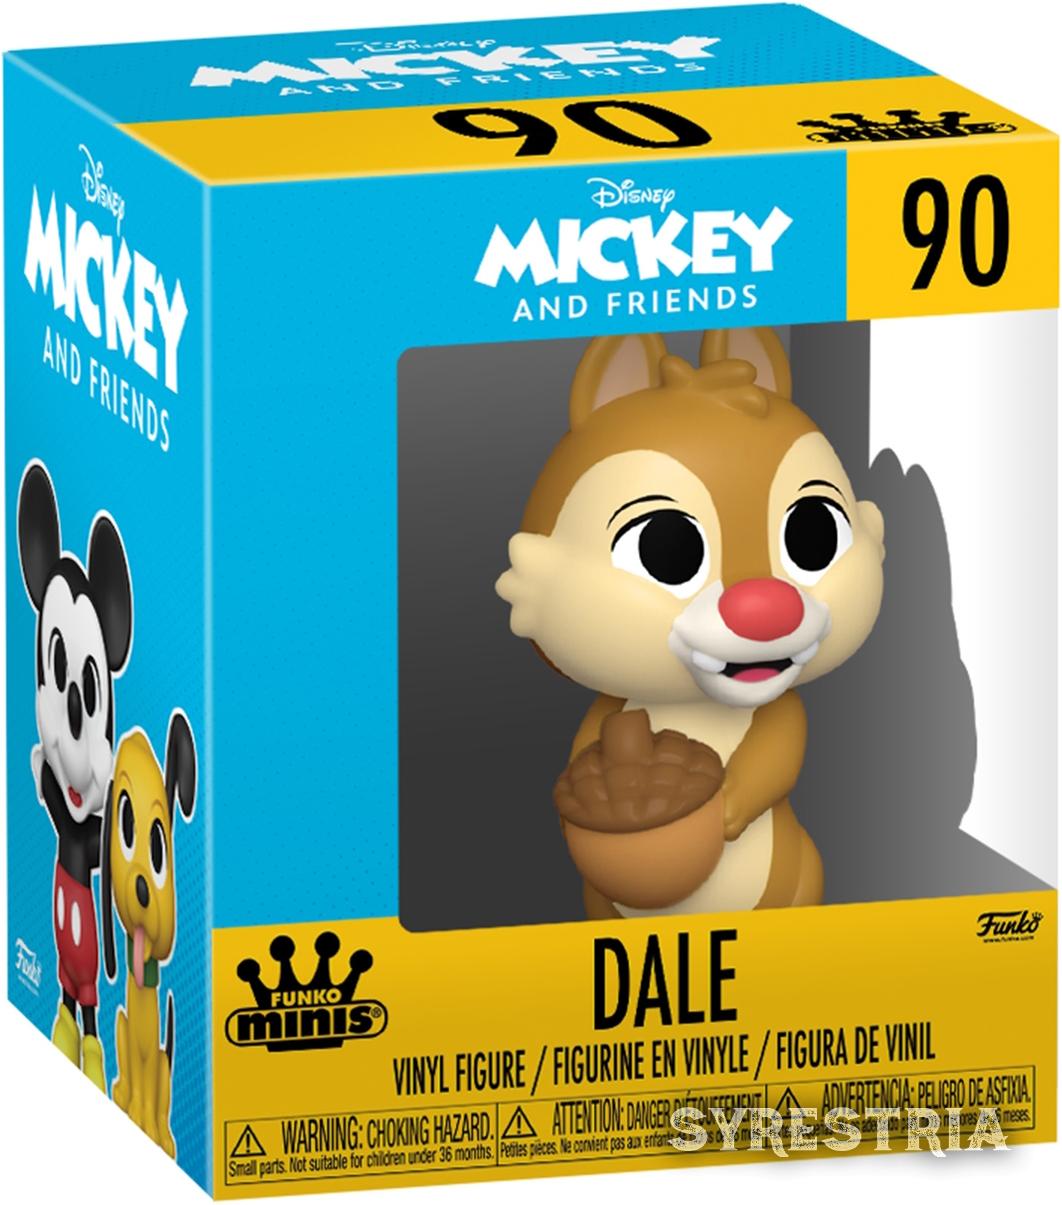 Disney Mickey and Frinds - Dale 90 - Funko Minis Vynl Figuren